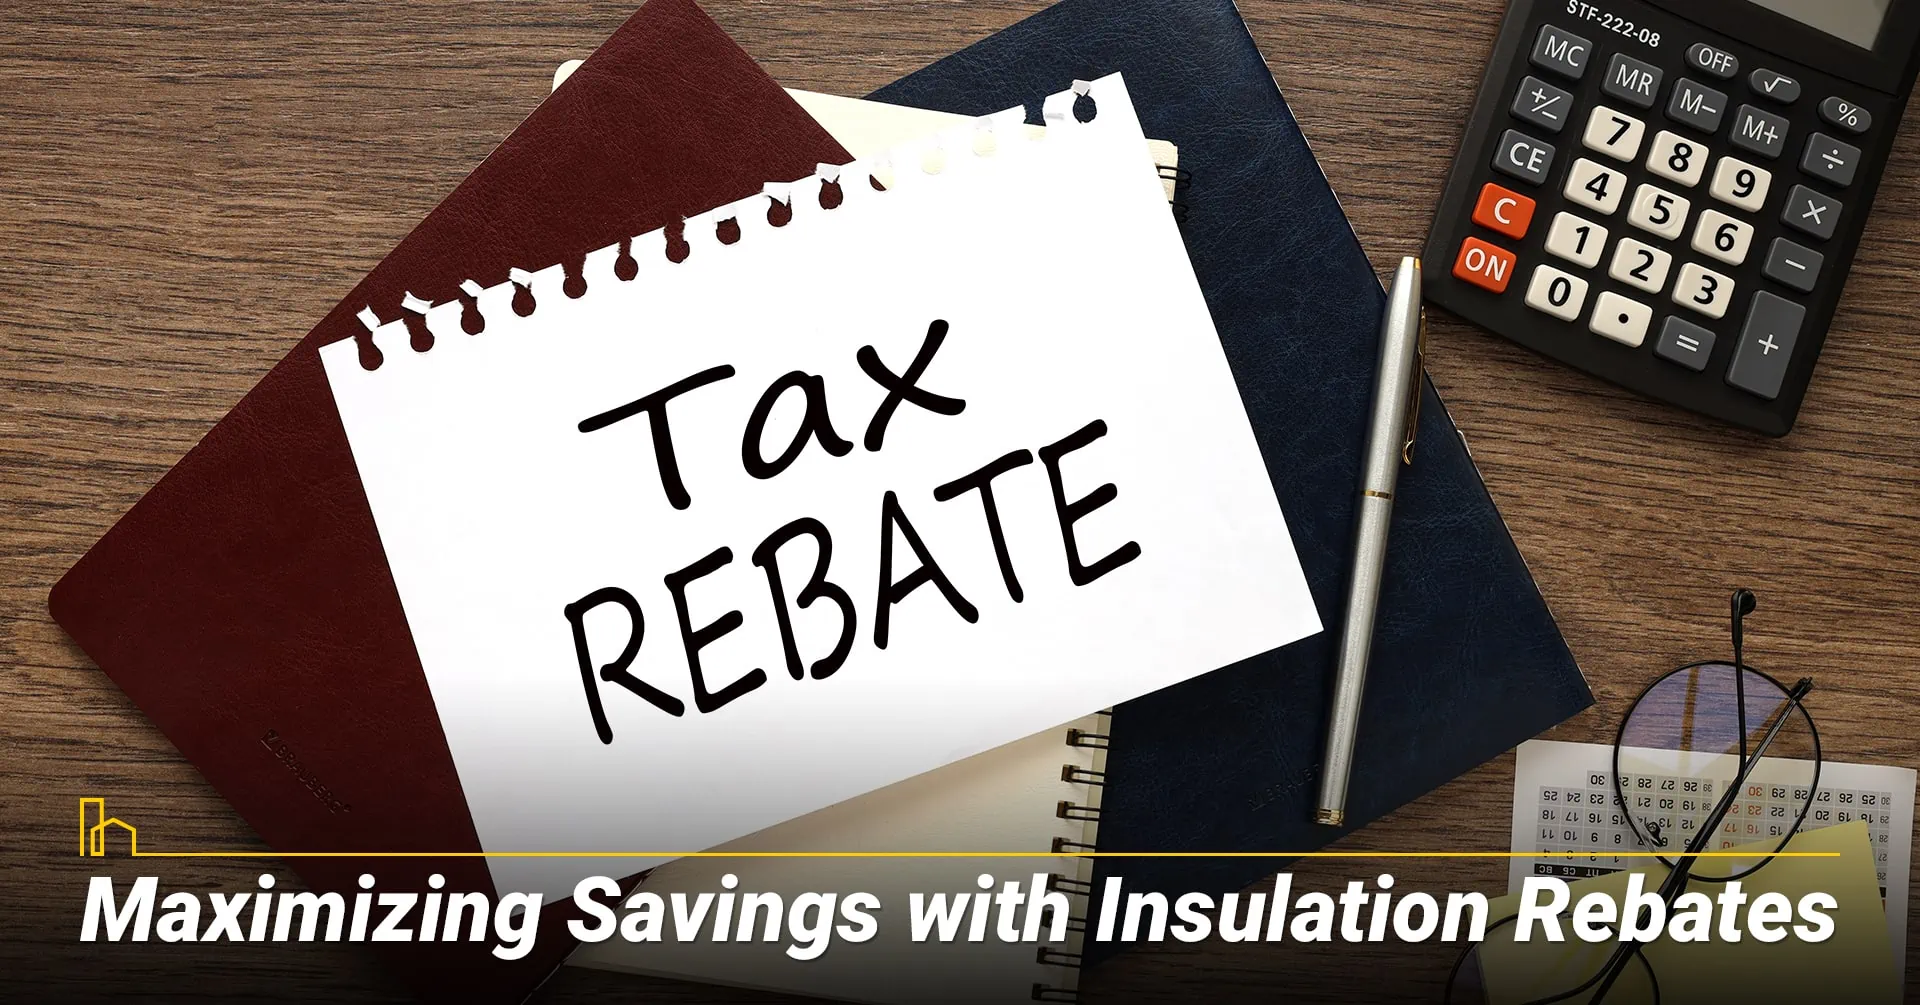 5. Maximizing Savings with Insulation Rebates